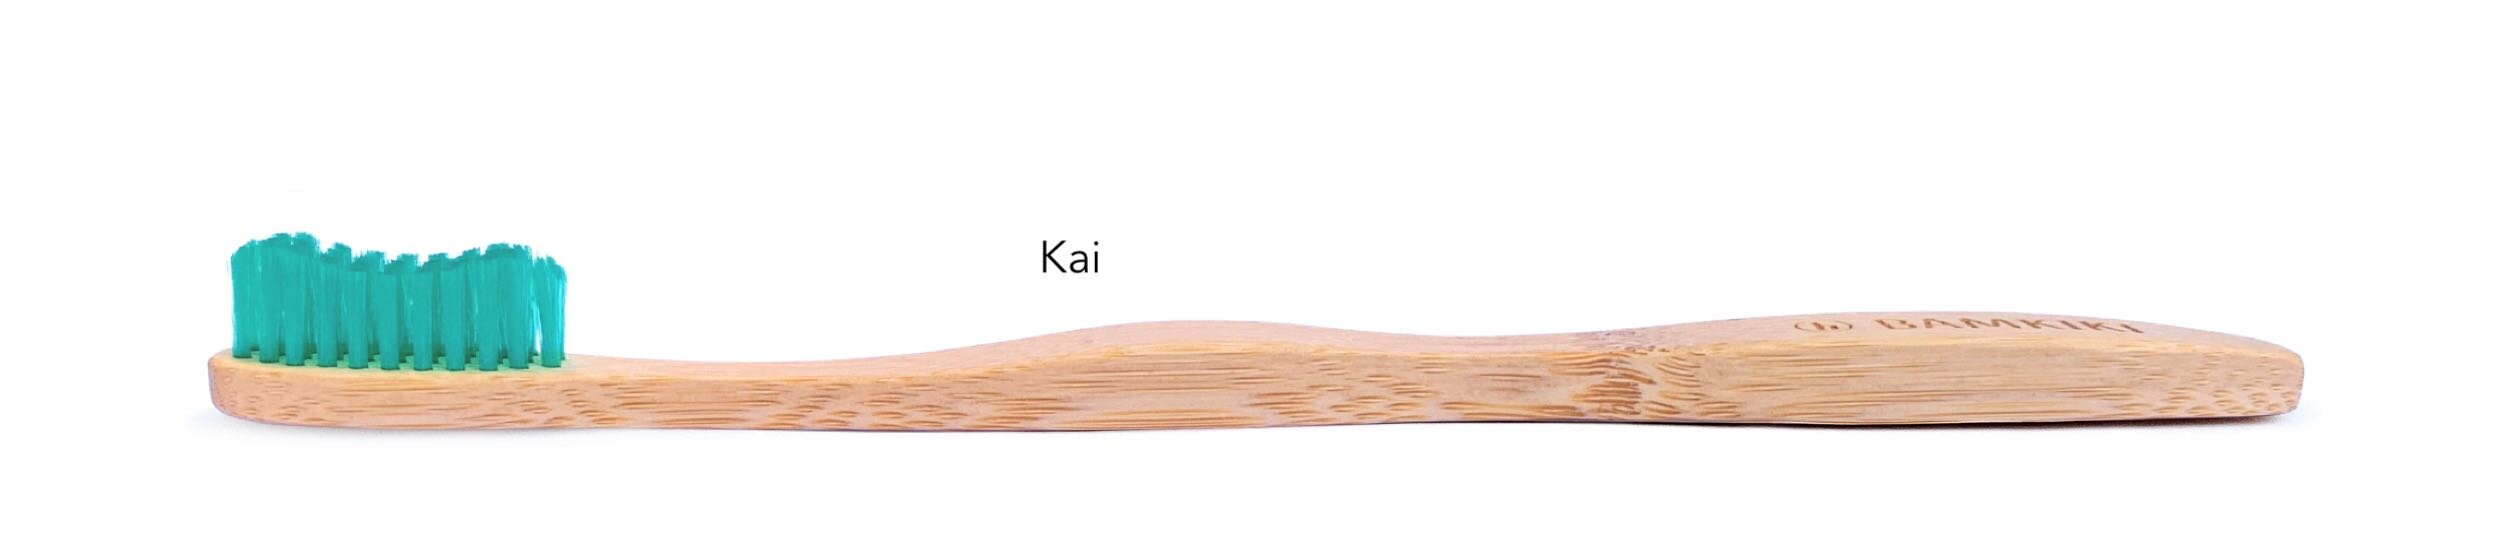 Bamkiki adult size biodegradable eco riendly bamboo toothbrush Kai horizontal layout resize.jpg